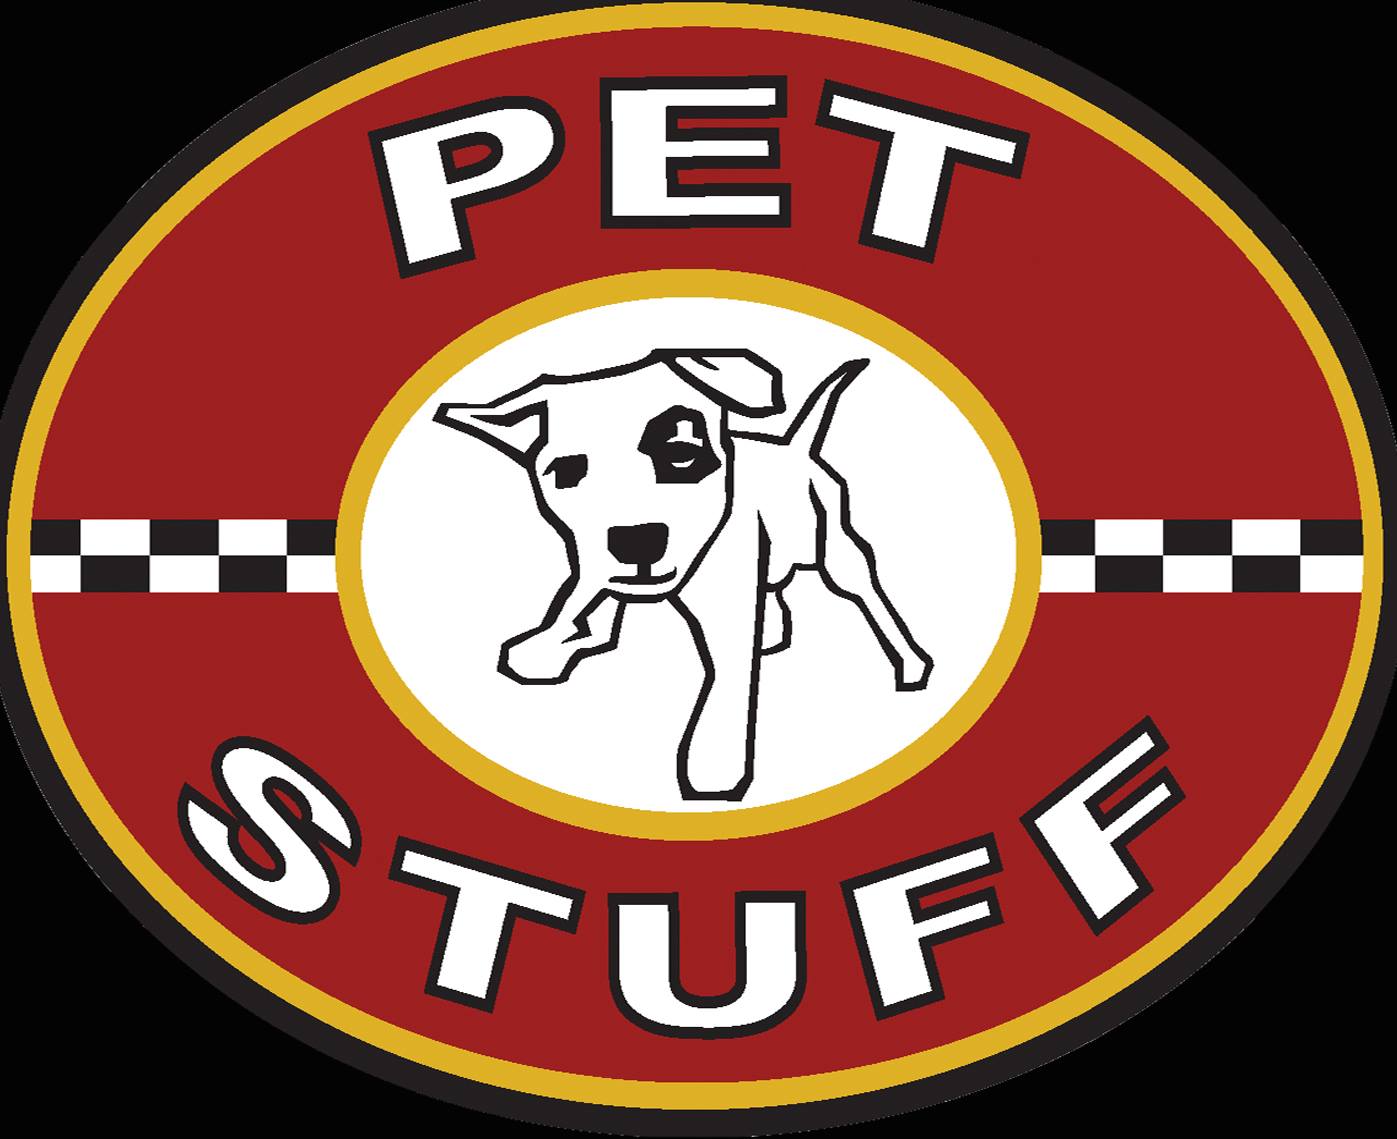 Company logo of Pet Stuff